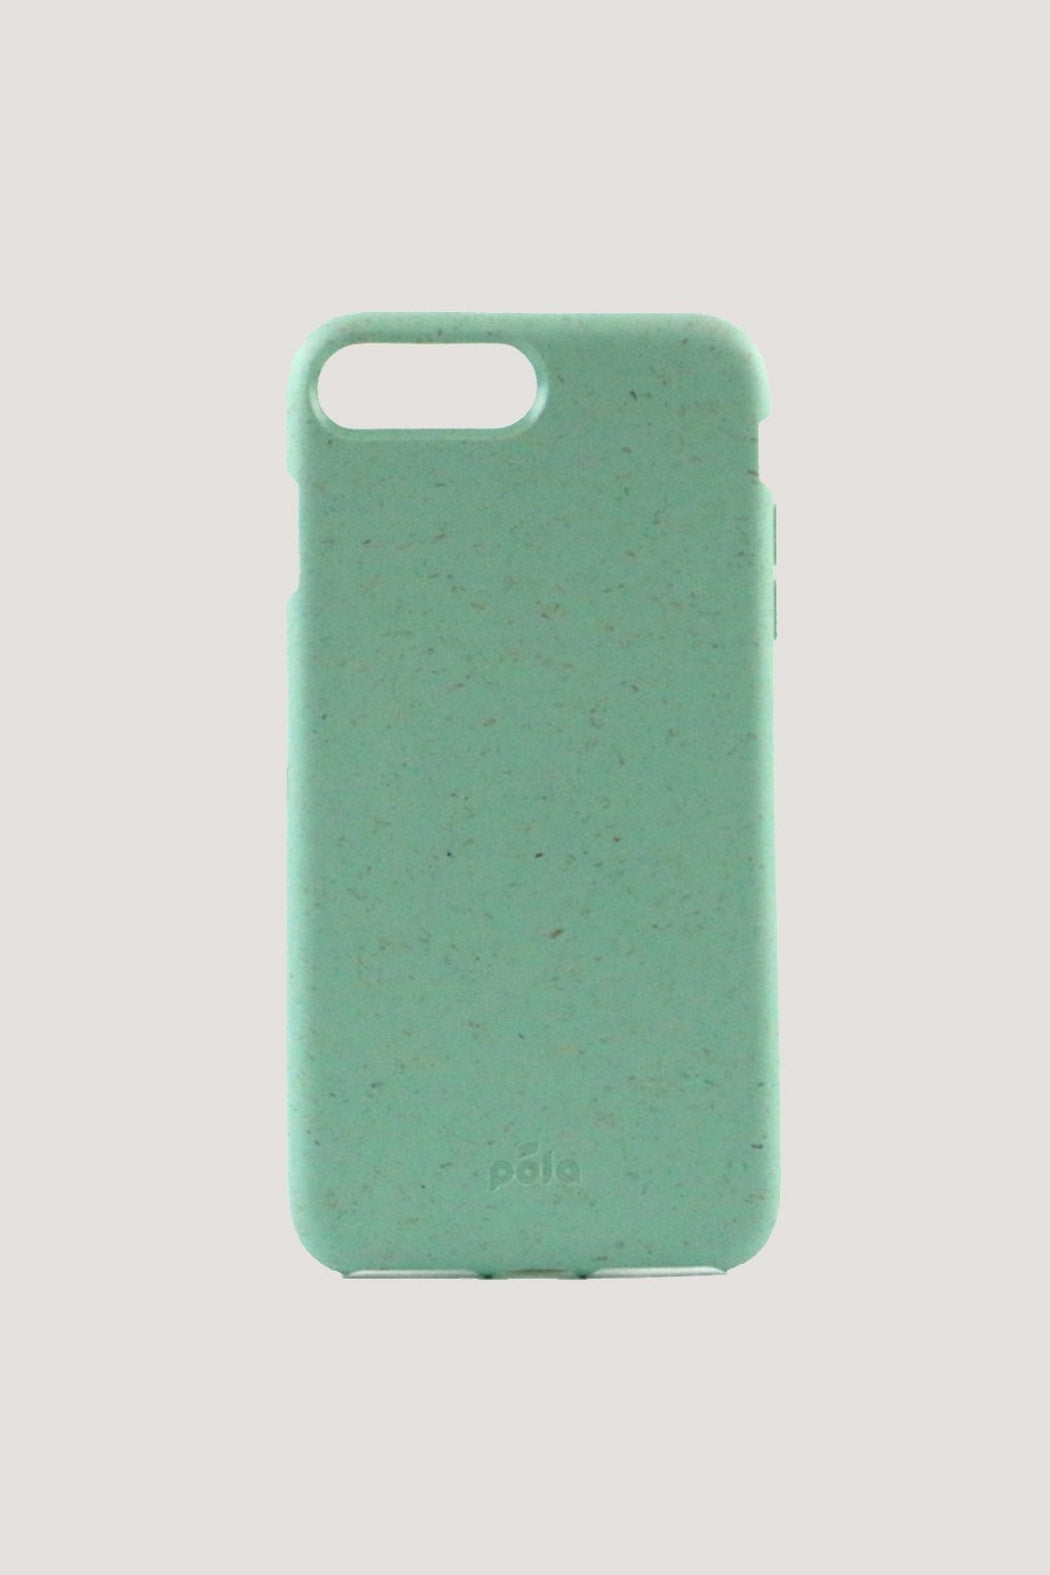 Pela iPhone 6+/6s+/7+/8+ Eco-Friendly Compostable Case - Turquoise Turtle